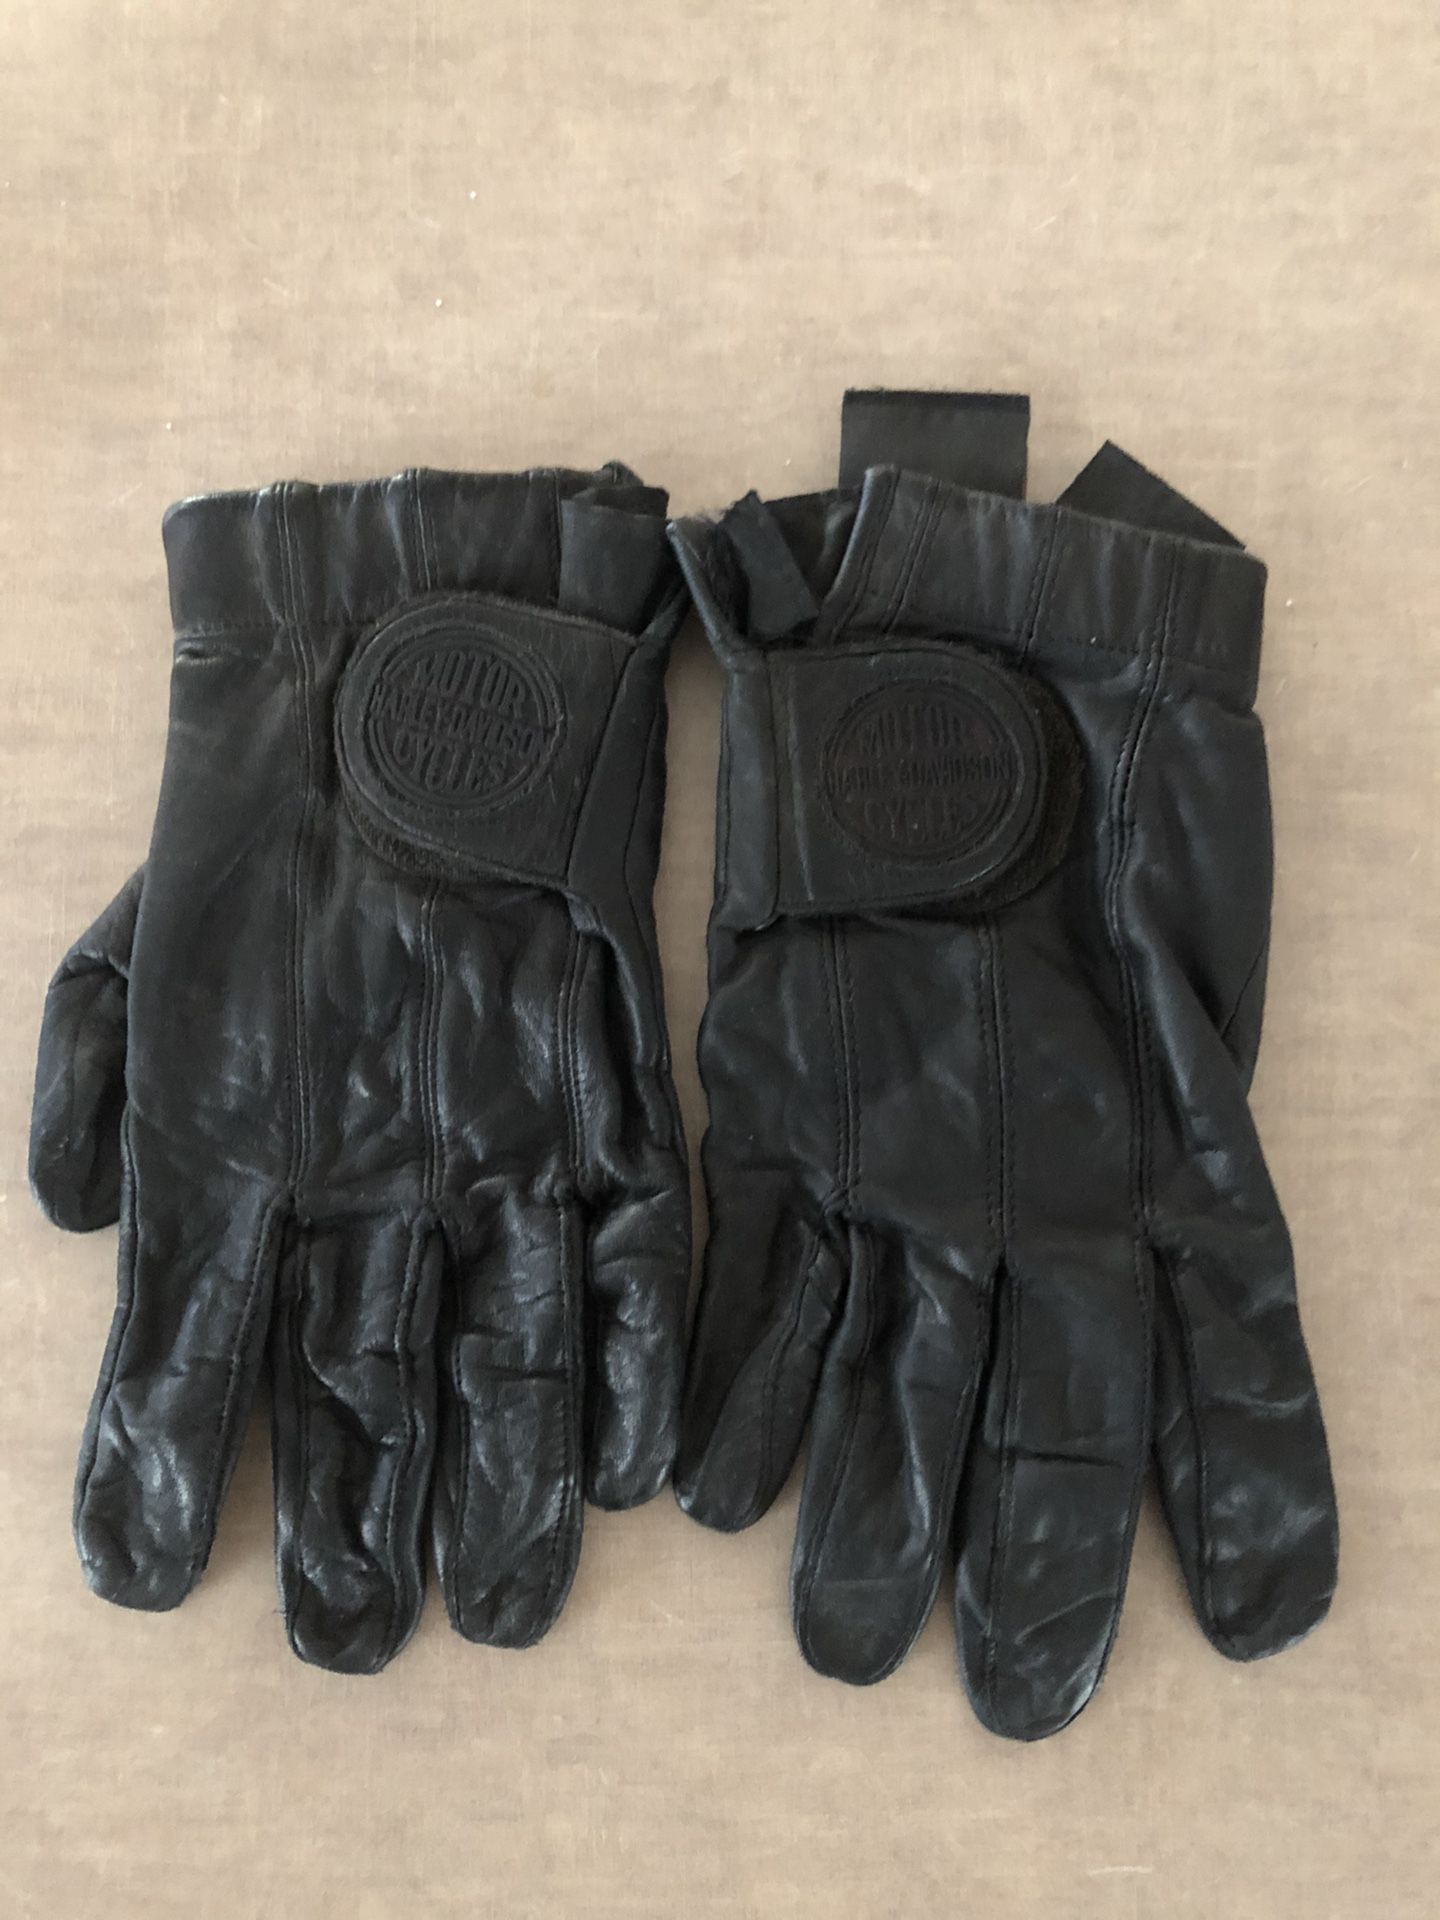 Harley-Davidson gloves